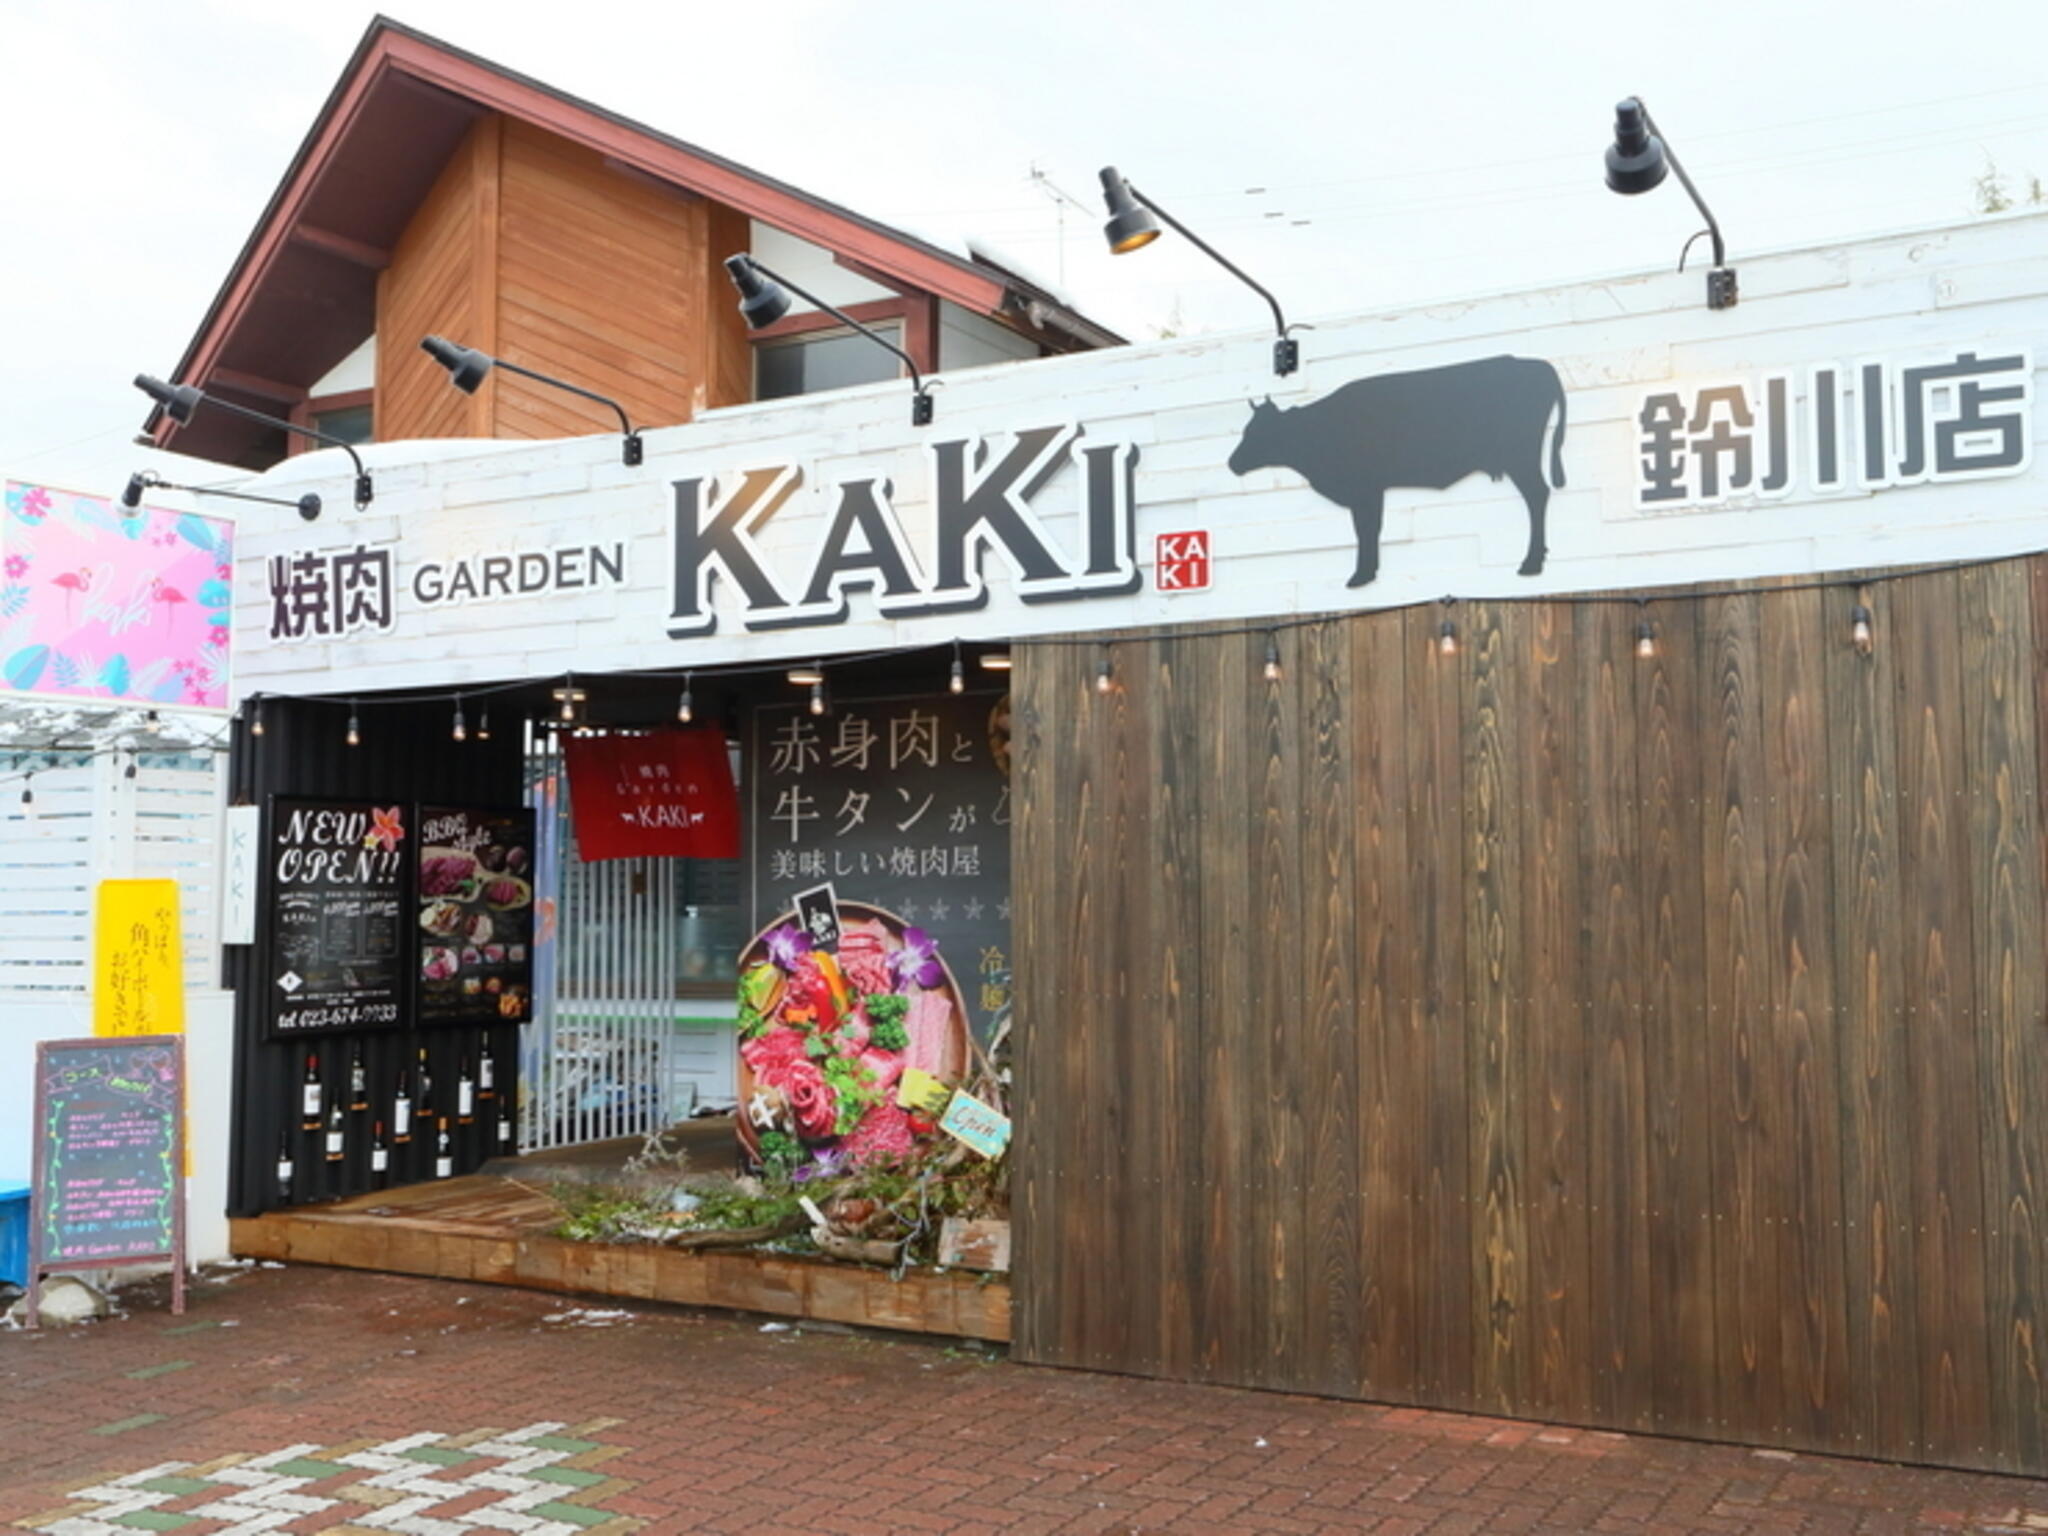 焼肉 Garden KAKI 鈴川店の代表写真7